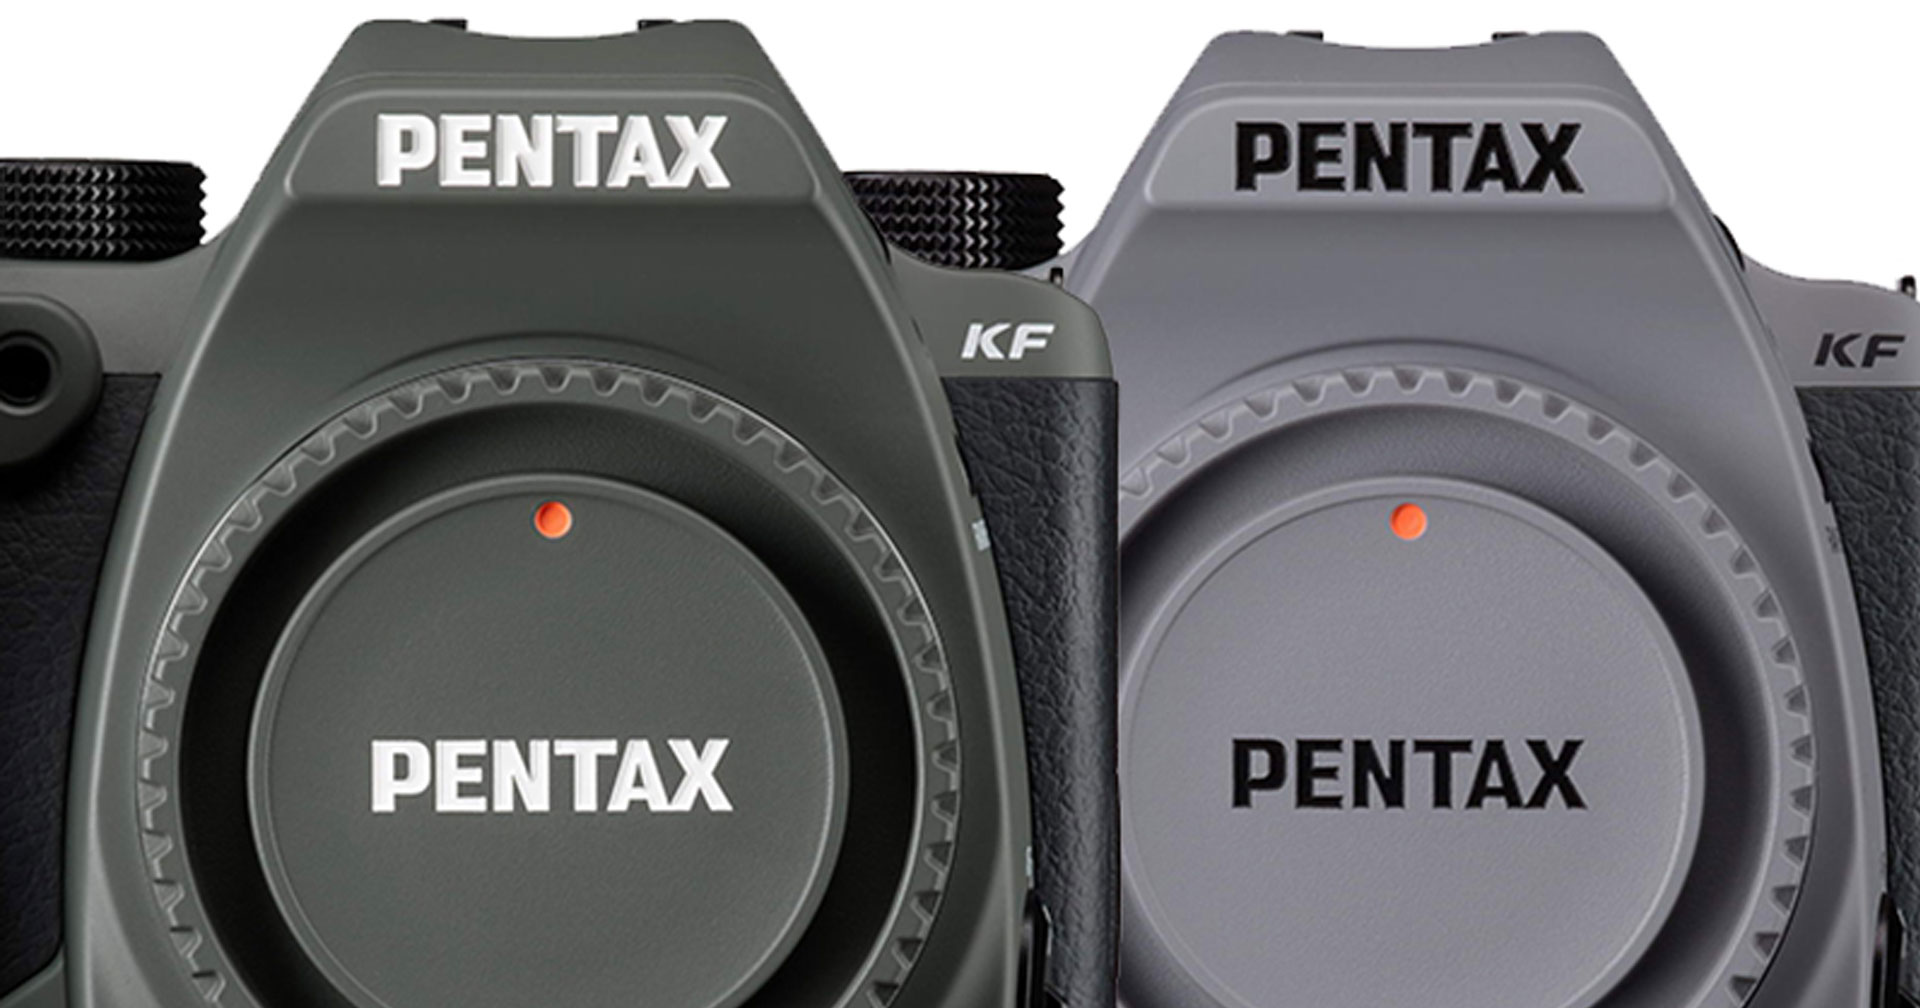 Pentax KF ออกรุ่นพิเศษในสีใหม่ Olive และ Stone พร้อมสาย Peak Design เข้าคู่กัน